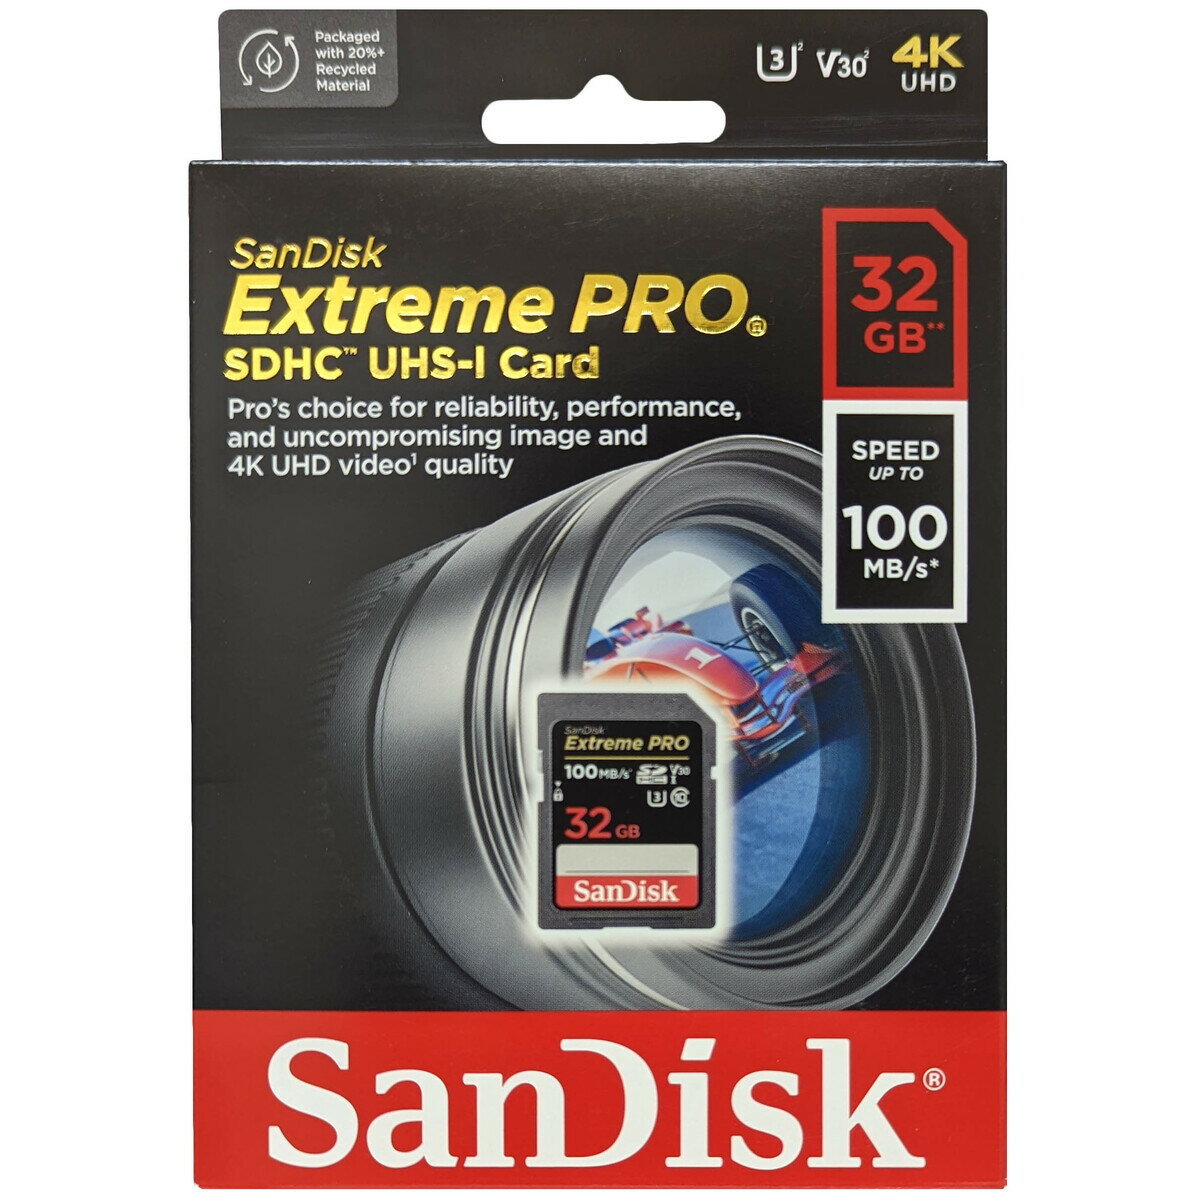 SanDisk サンディスク 並行輸入品 SDHCカード Extreme PRO 32GB SDSDXXO-032G-GN4IN